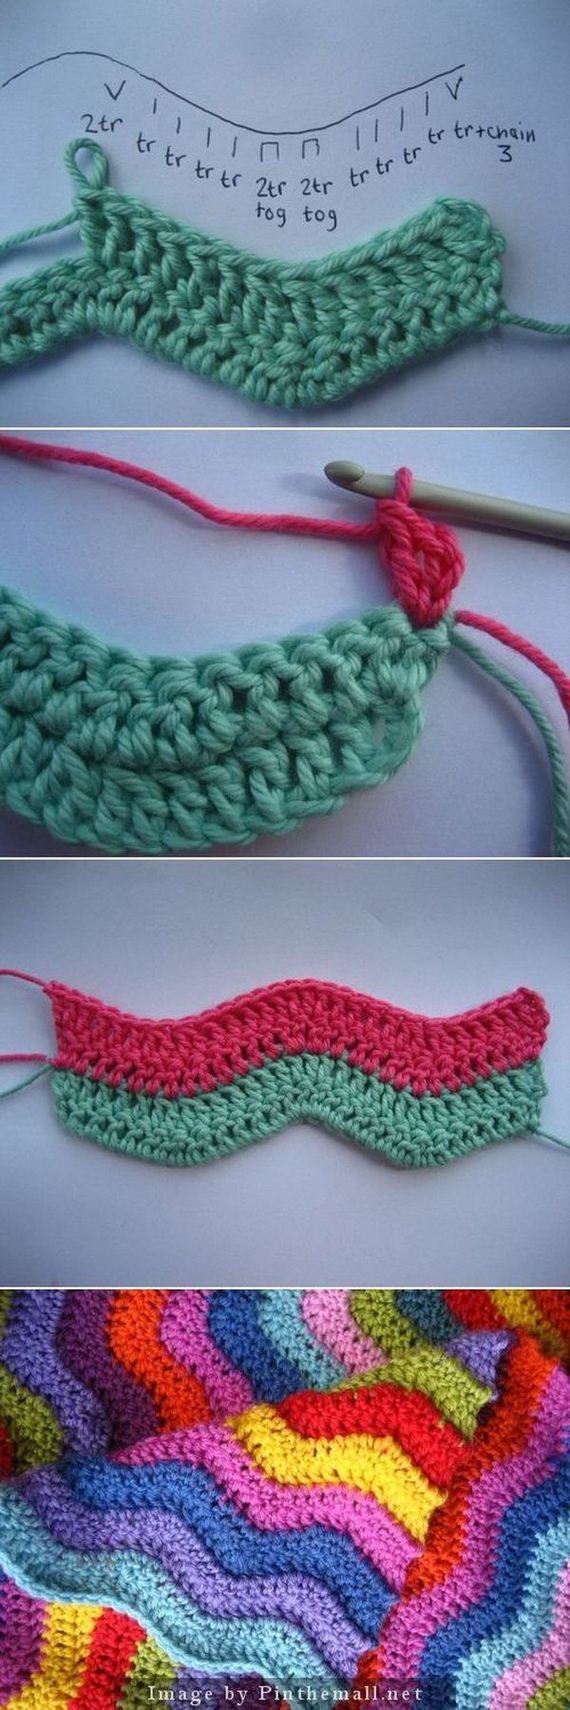 09-cool-easy-crochet-blankets